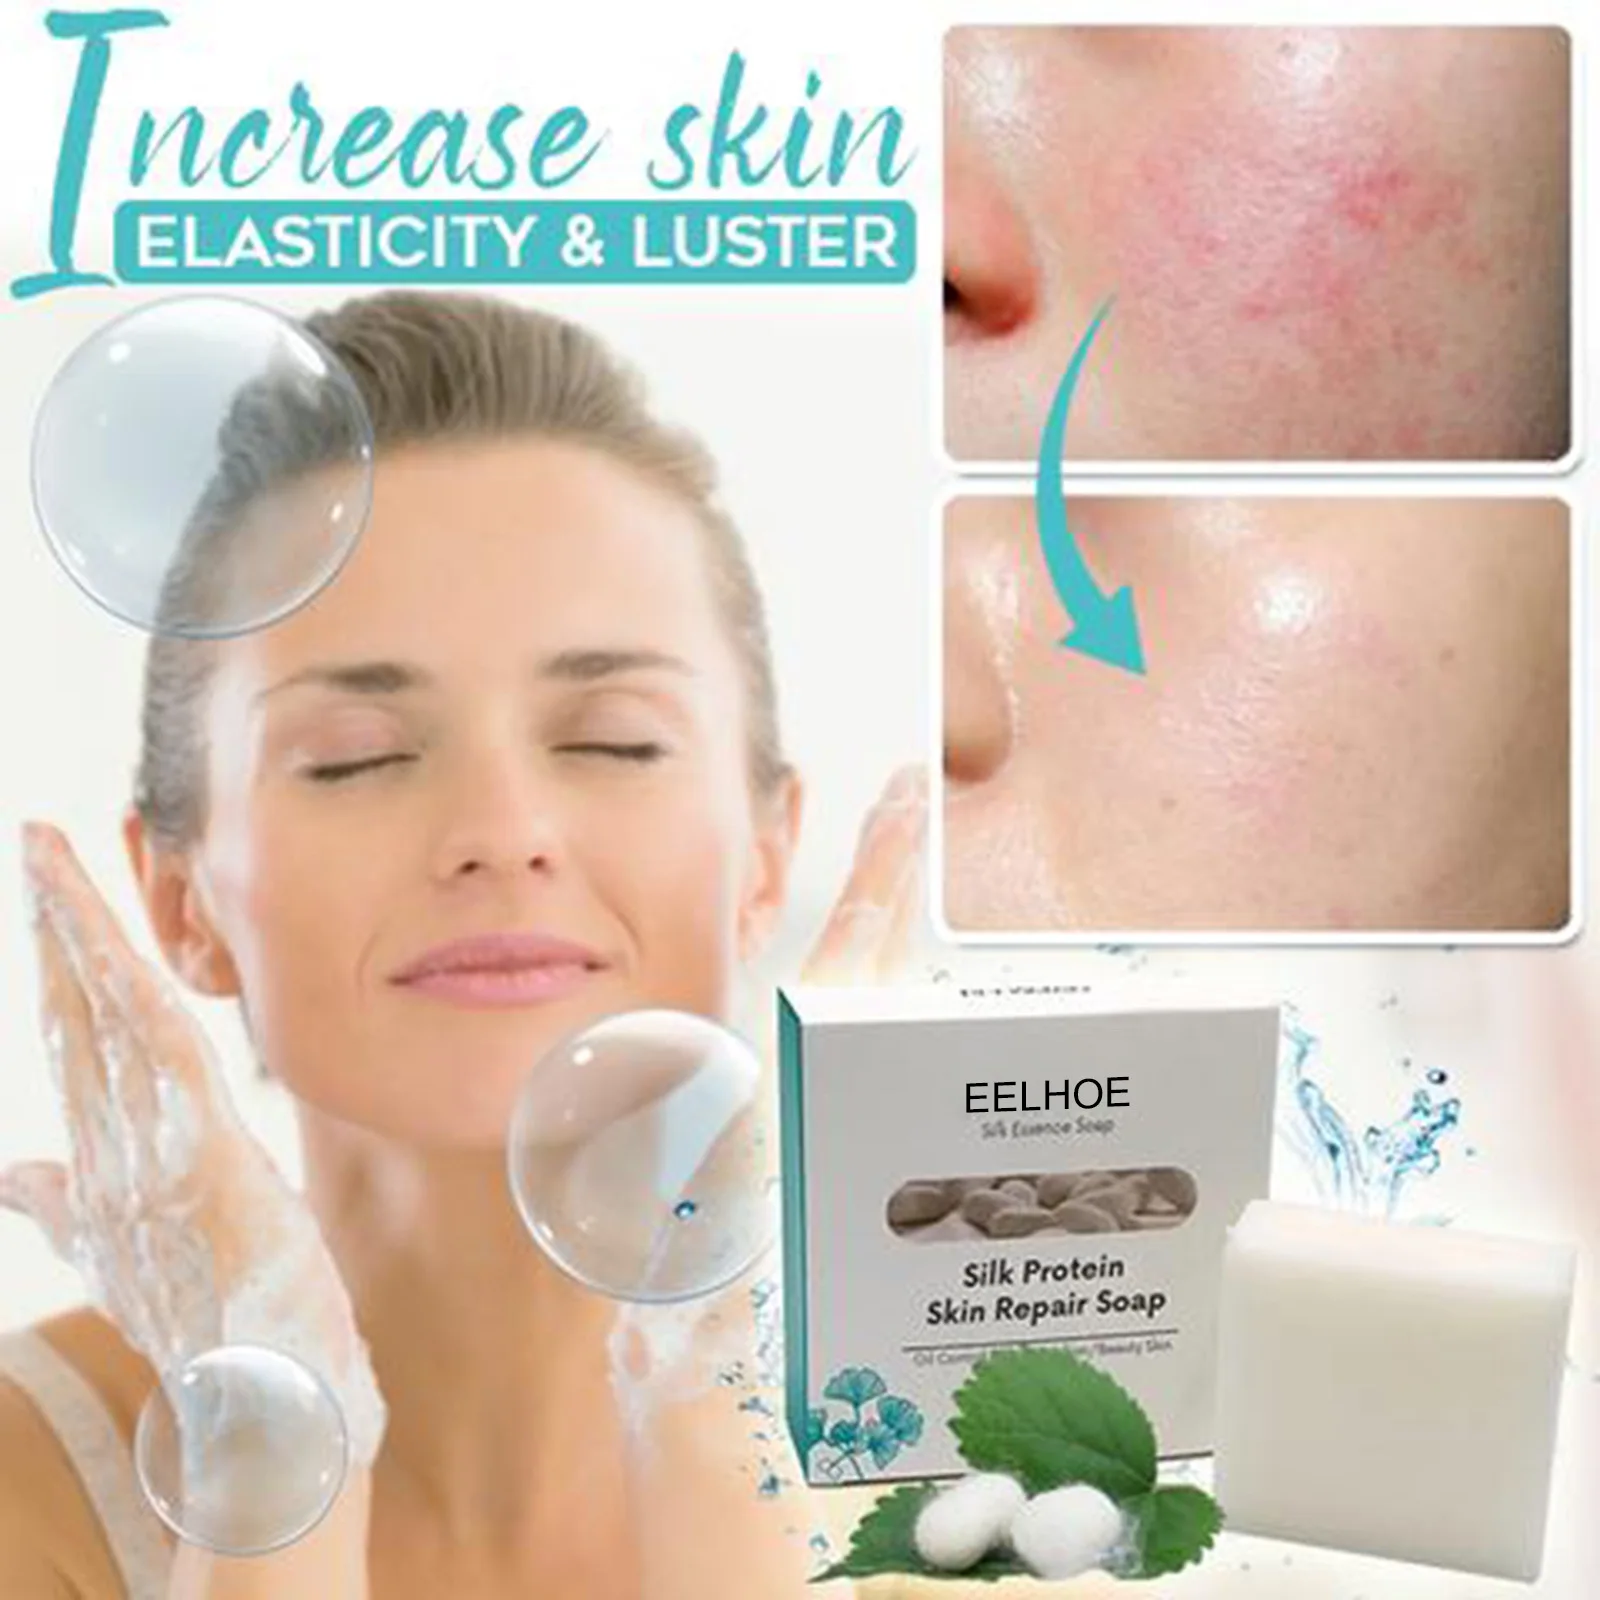 

Silk Protein Skin Repair Soap Facial Cleaning Soap Remove Mites Blackheads Natural Goat Milk Cleansing Bath Skin Oil 100g